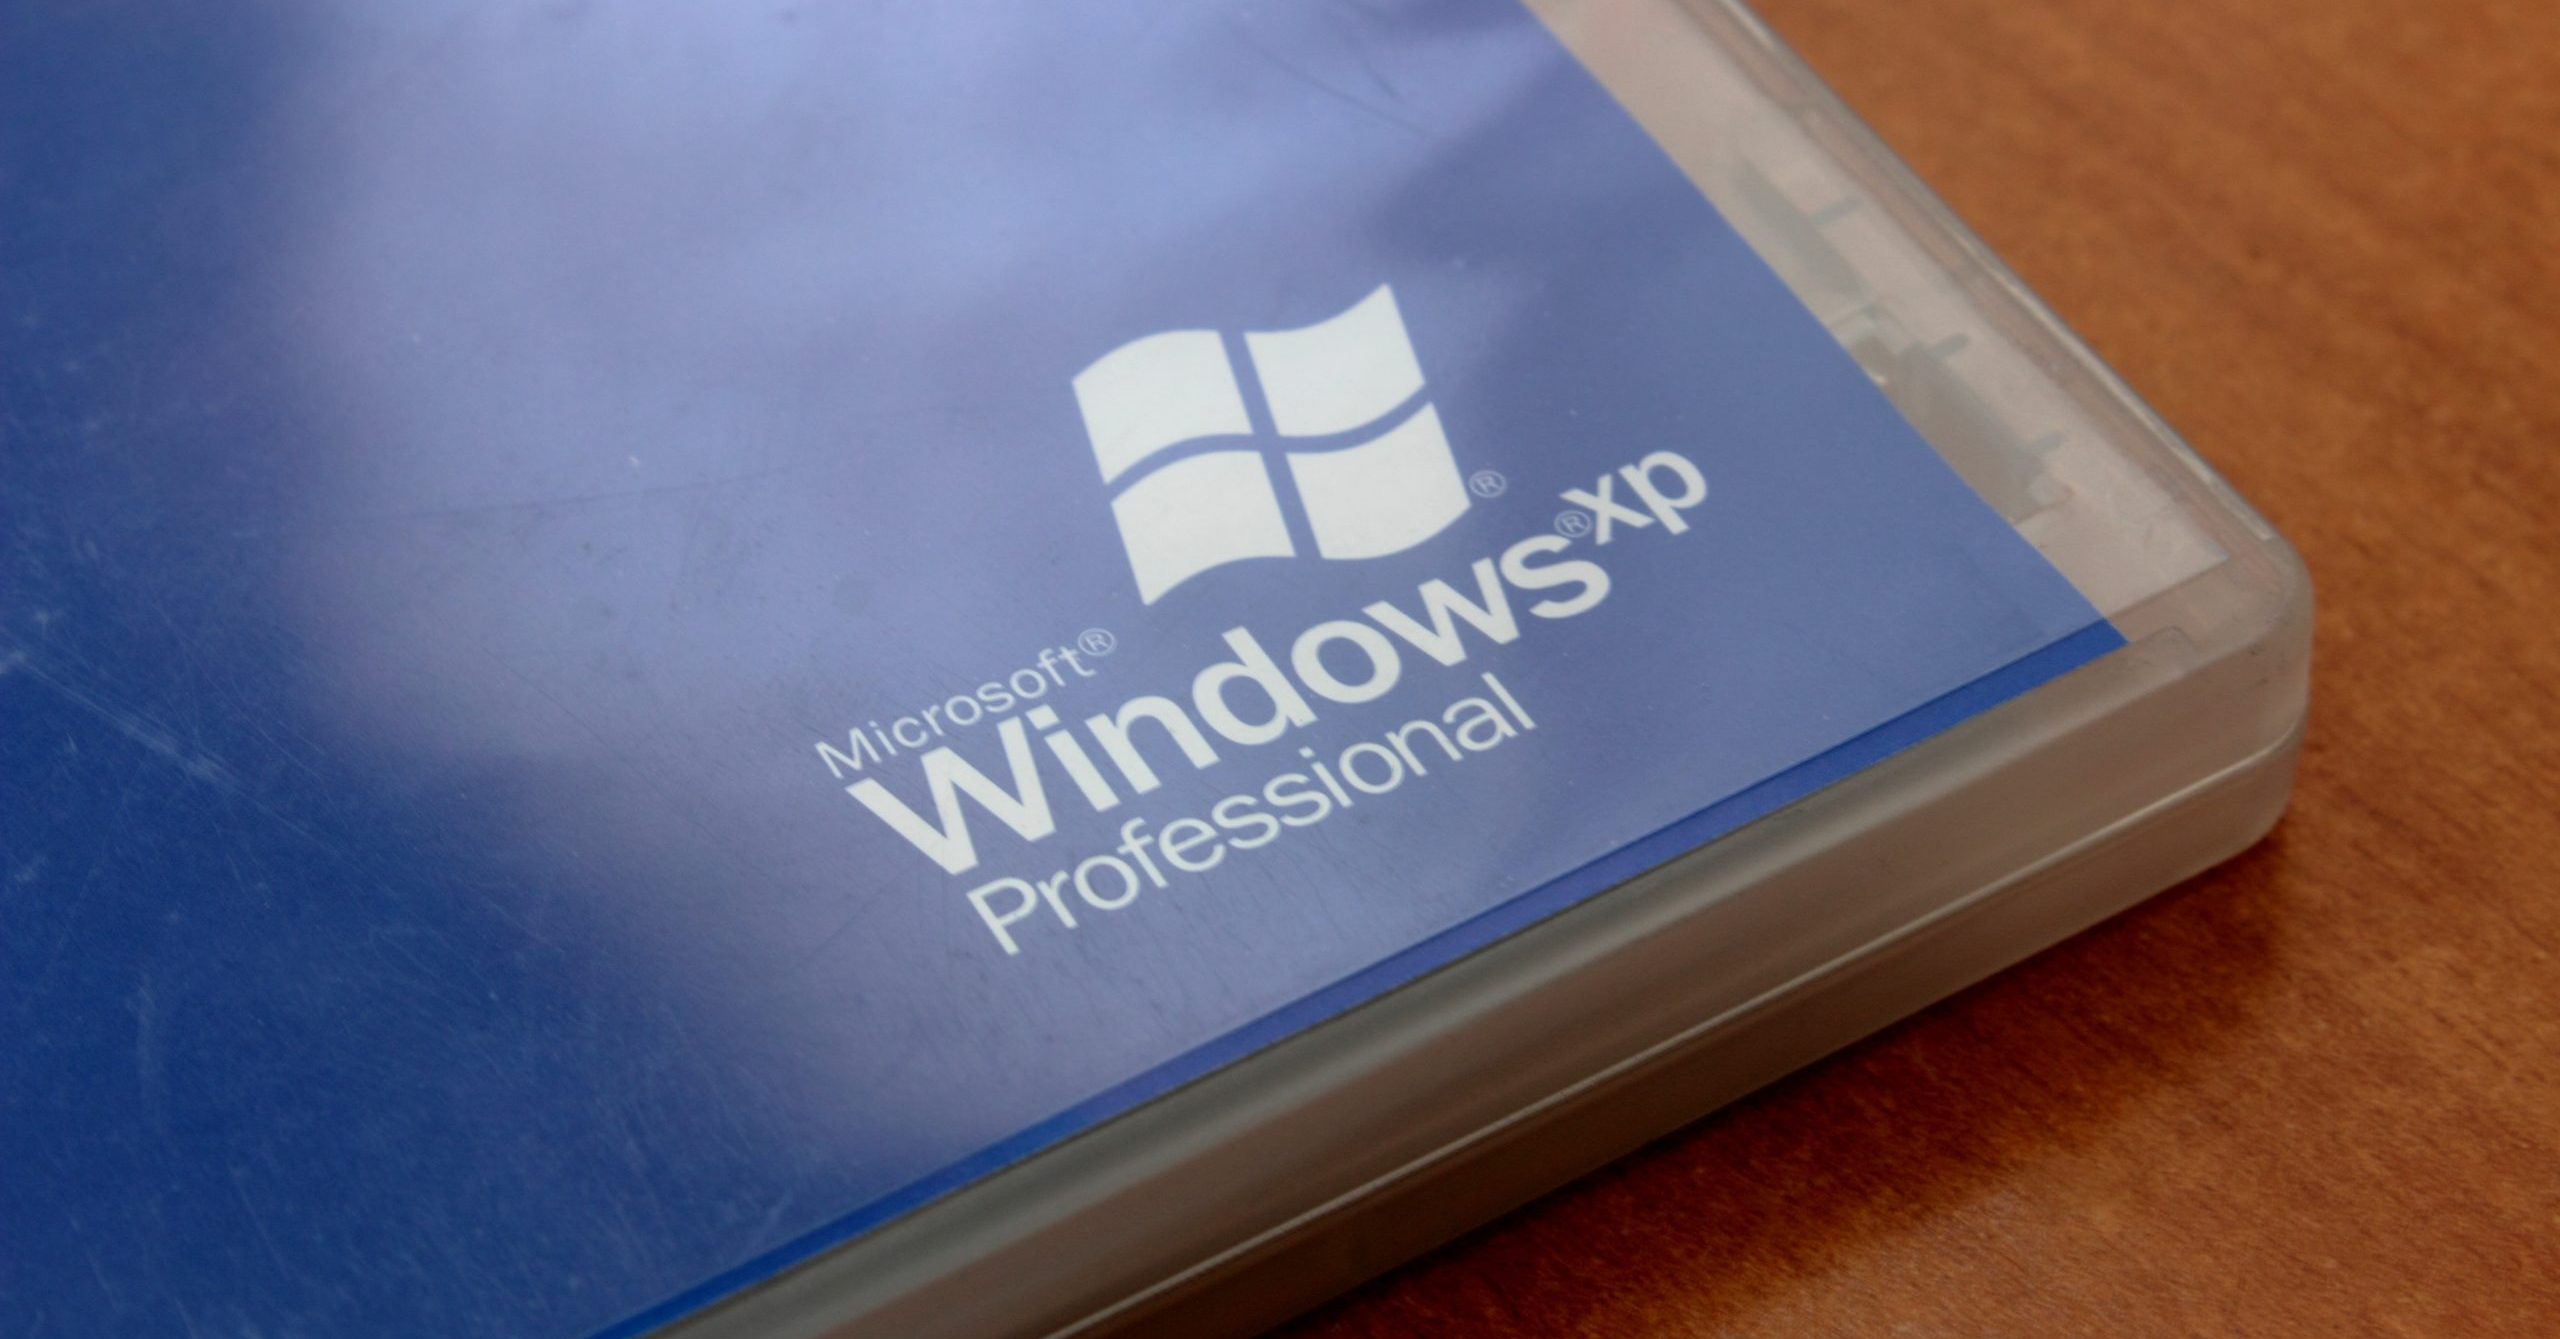 Windows XP Death Watch: Microsoft Support Ends Soon